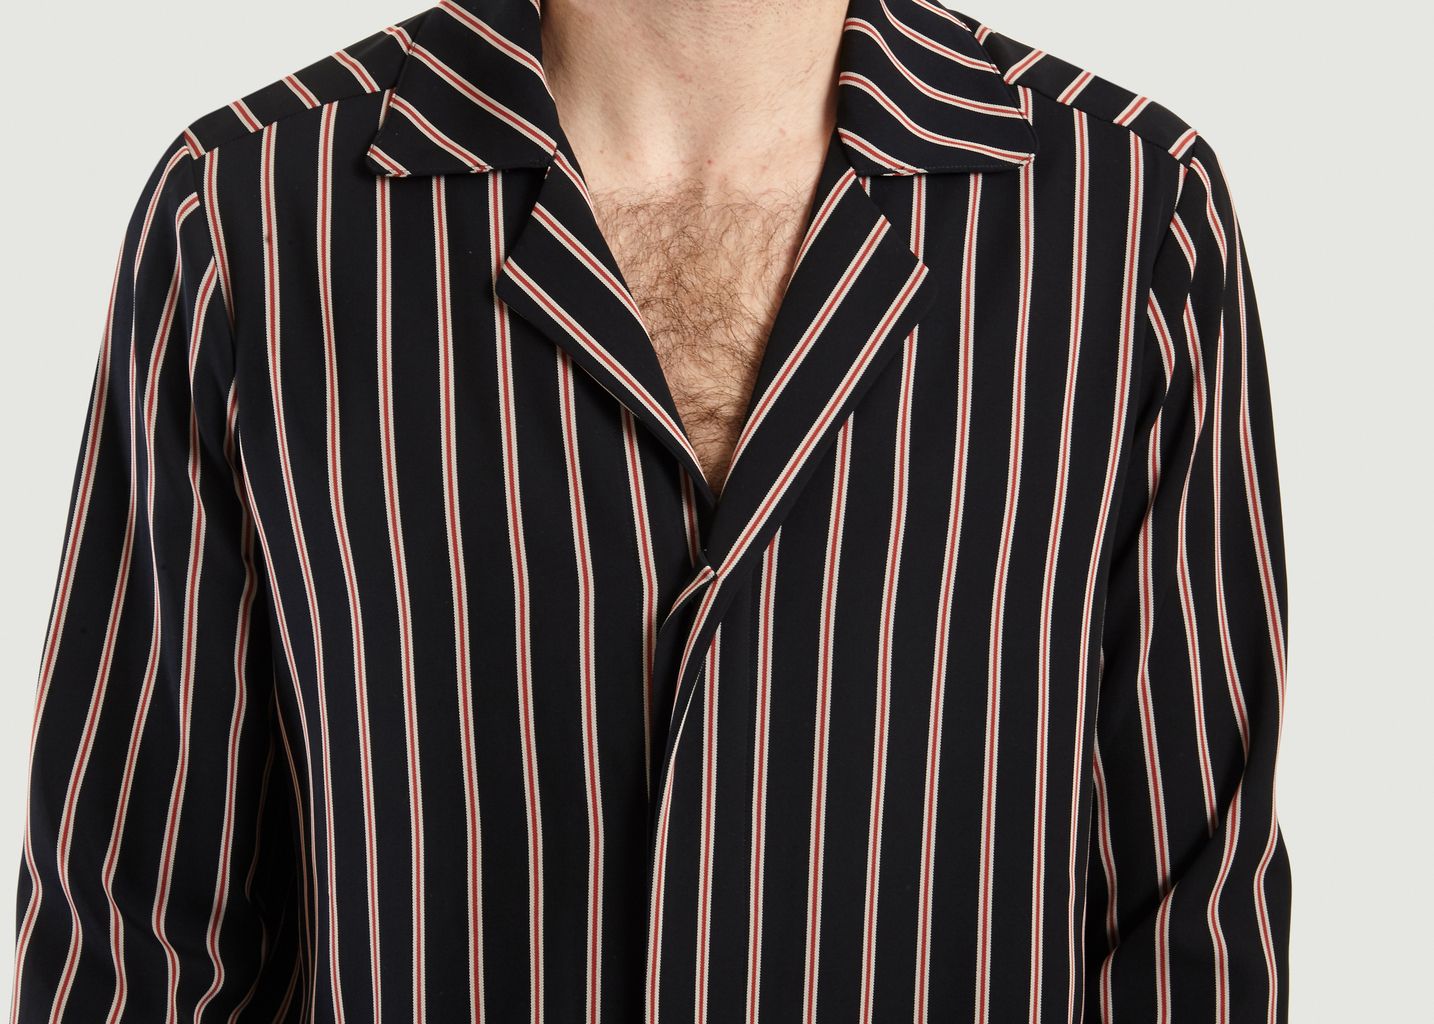 Manko B Striped Shirt - Gagan Paul